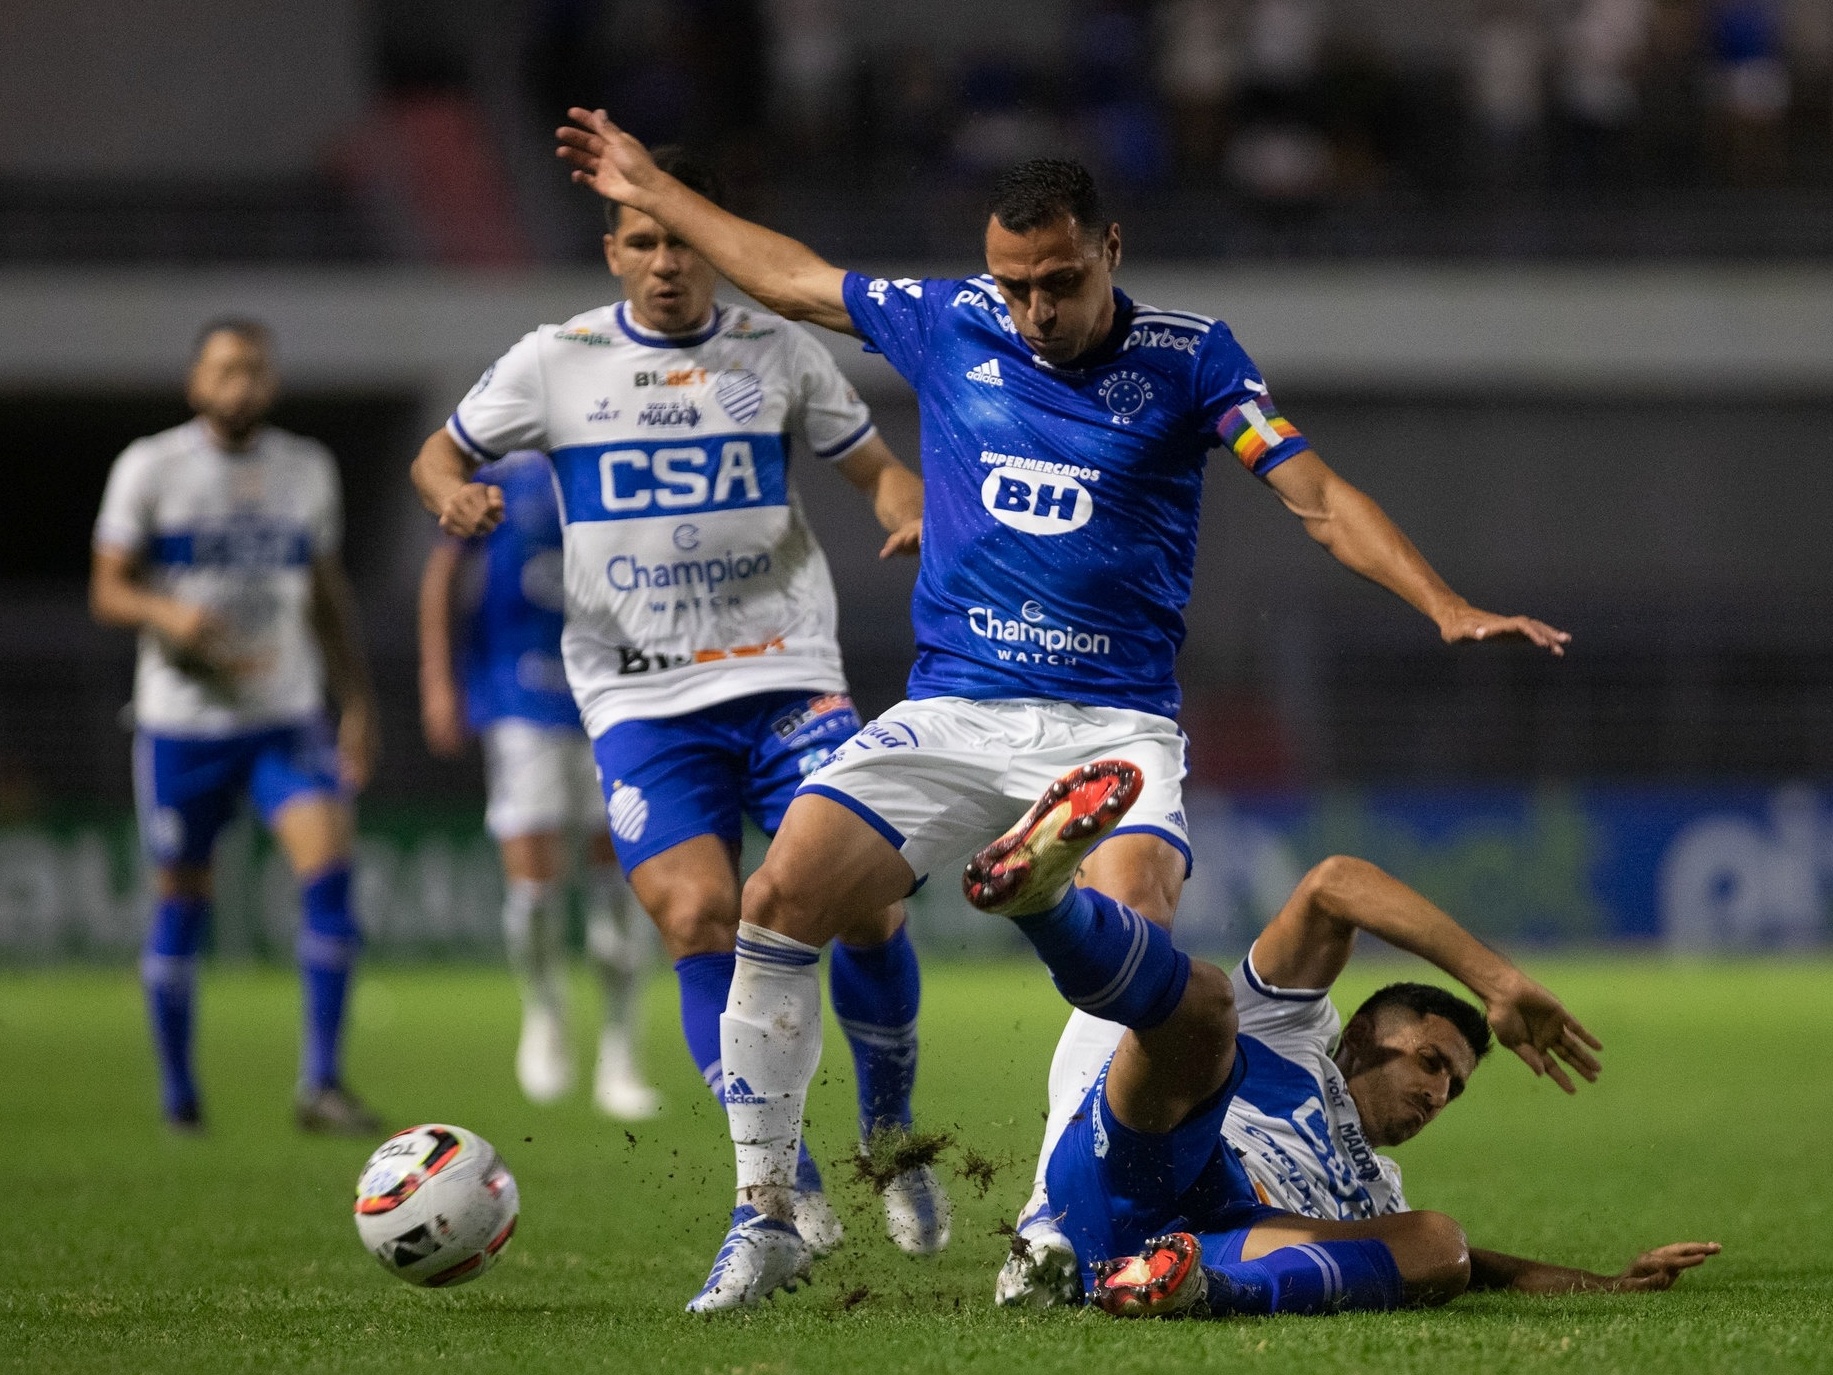 sᴀᴍᴜᴇʟ ᴠᴇɴᴀ̂ɴᴄɪo ™ on X: Jogos do 1º turno do Cruzeiro na Série B 2021   / X